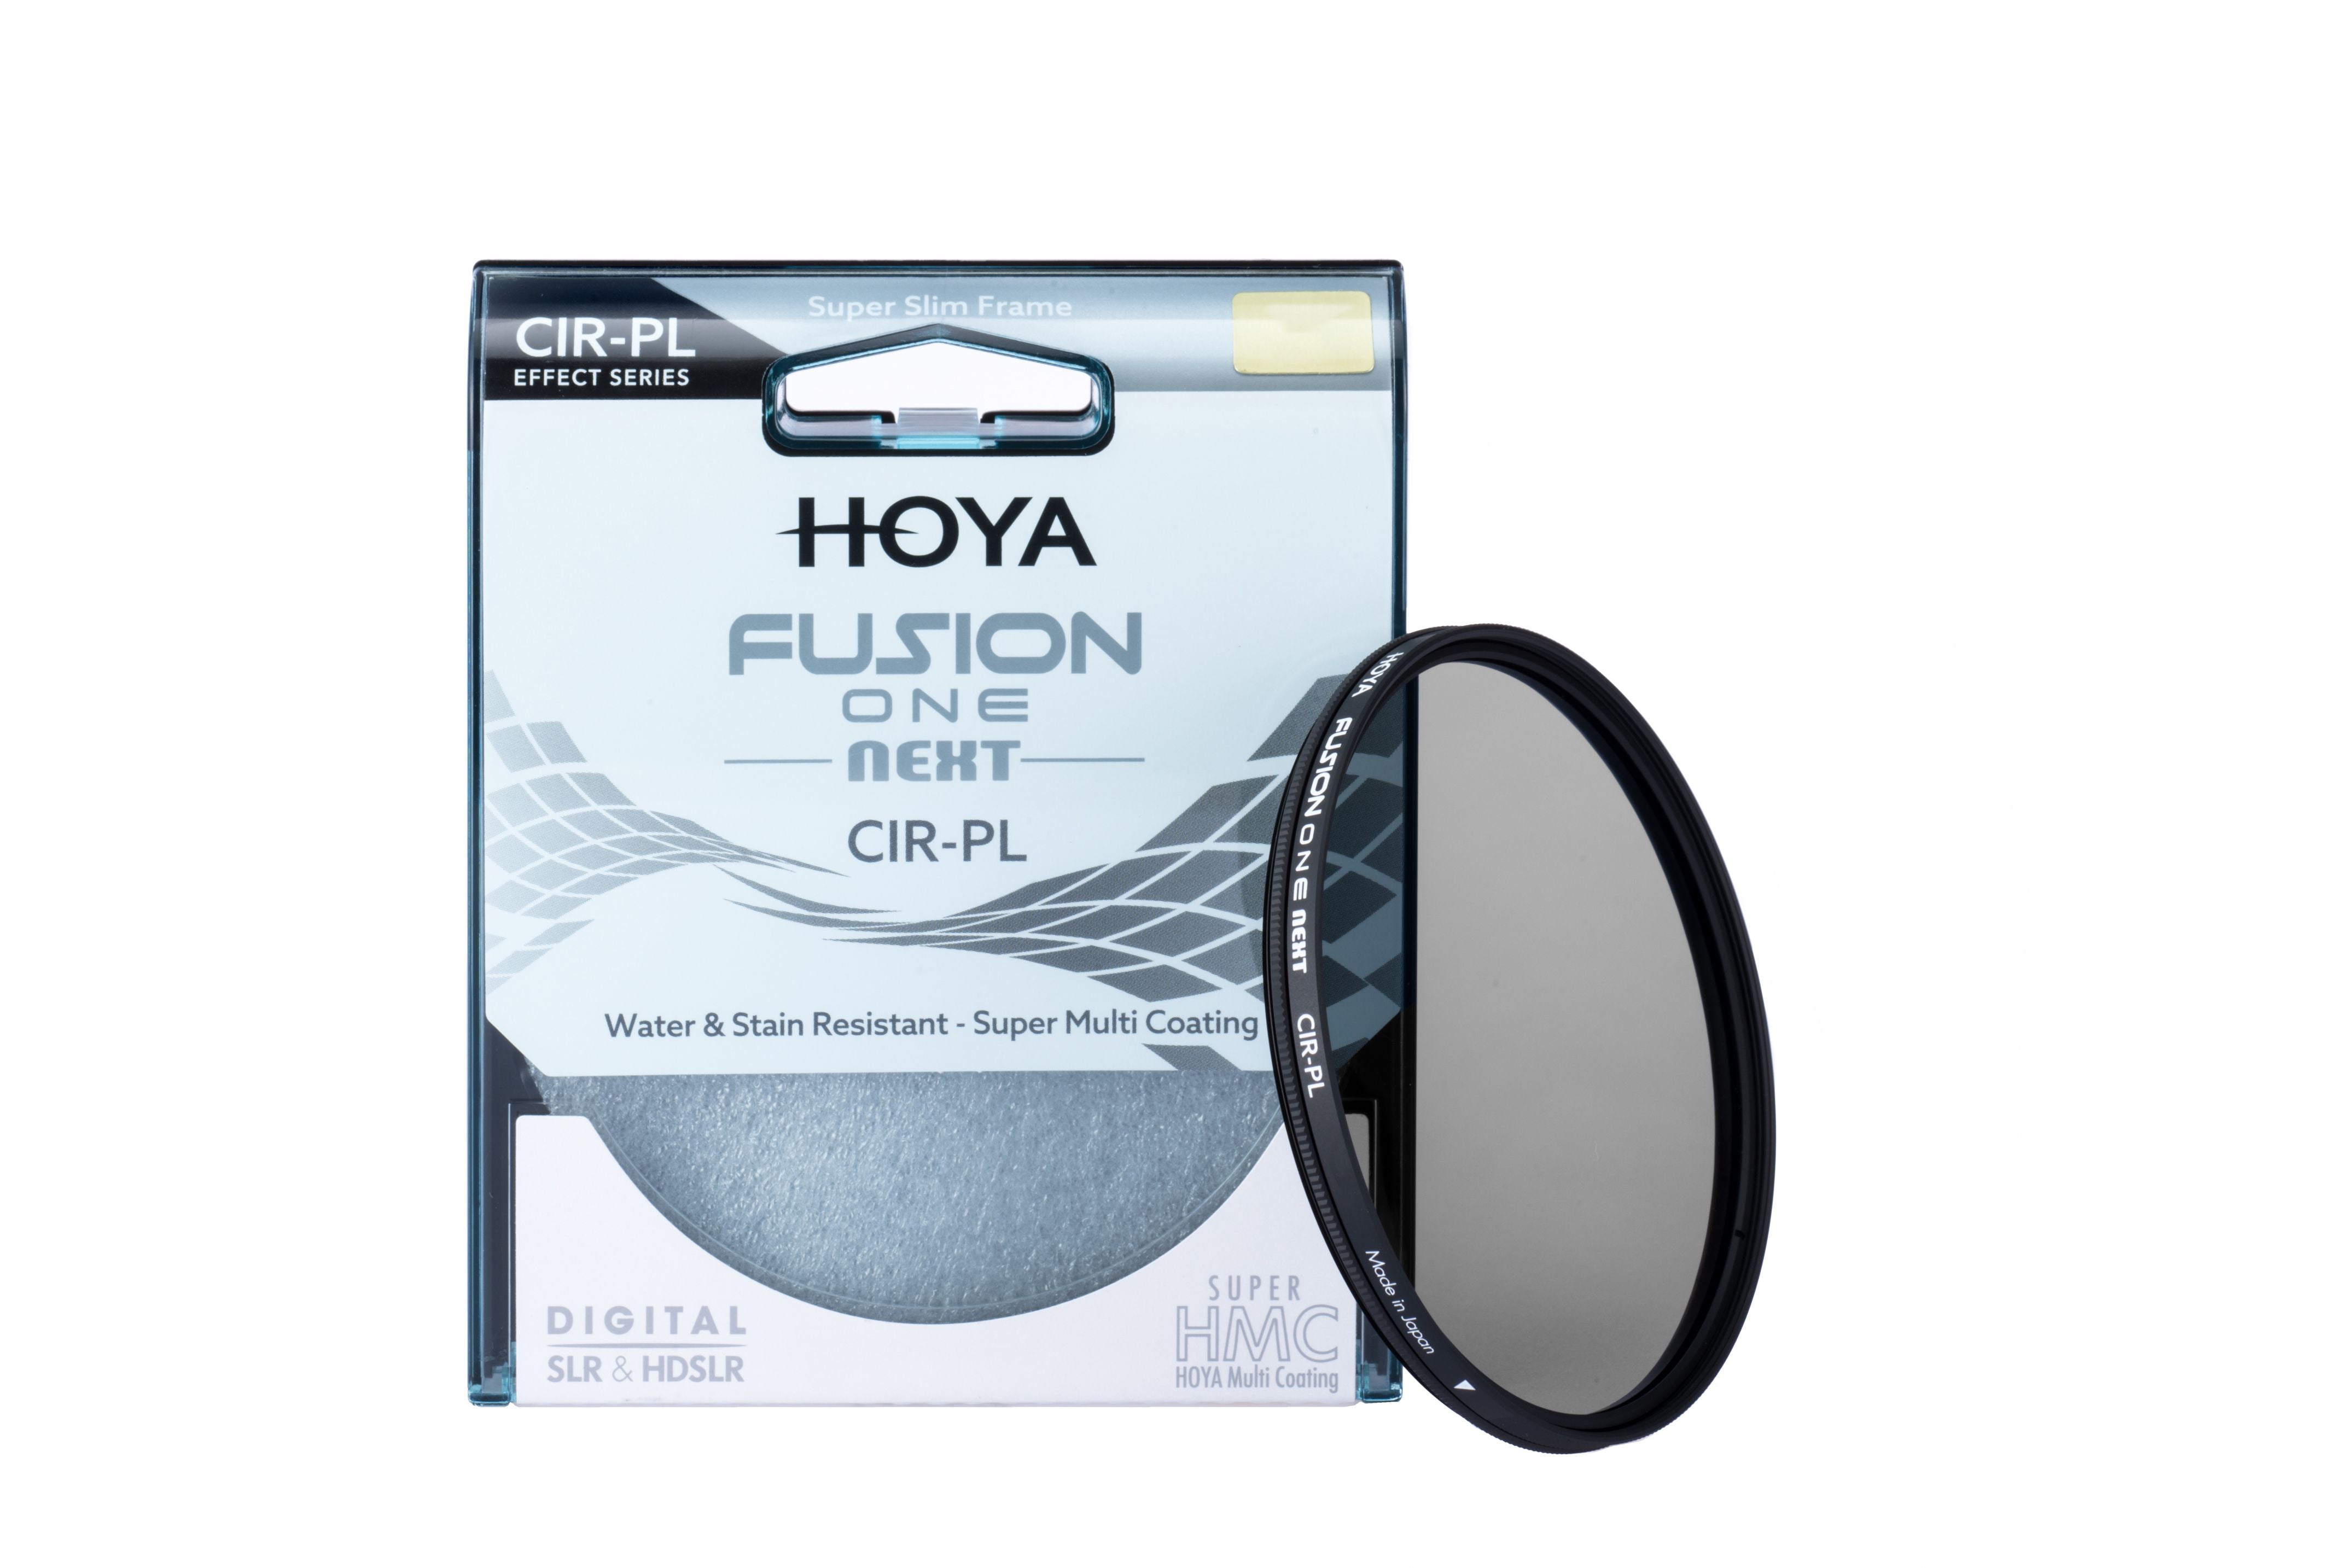 Hoya Fusion One Next Circular Polariser